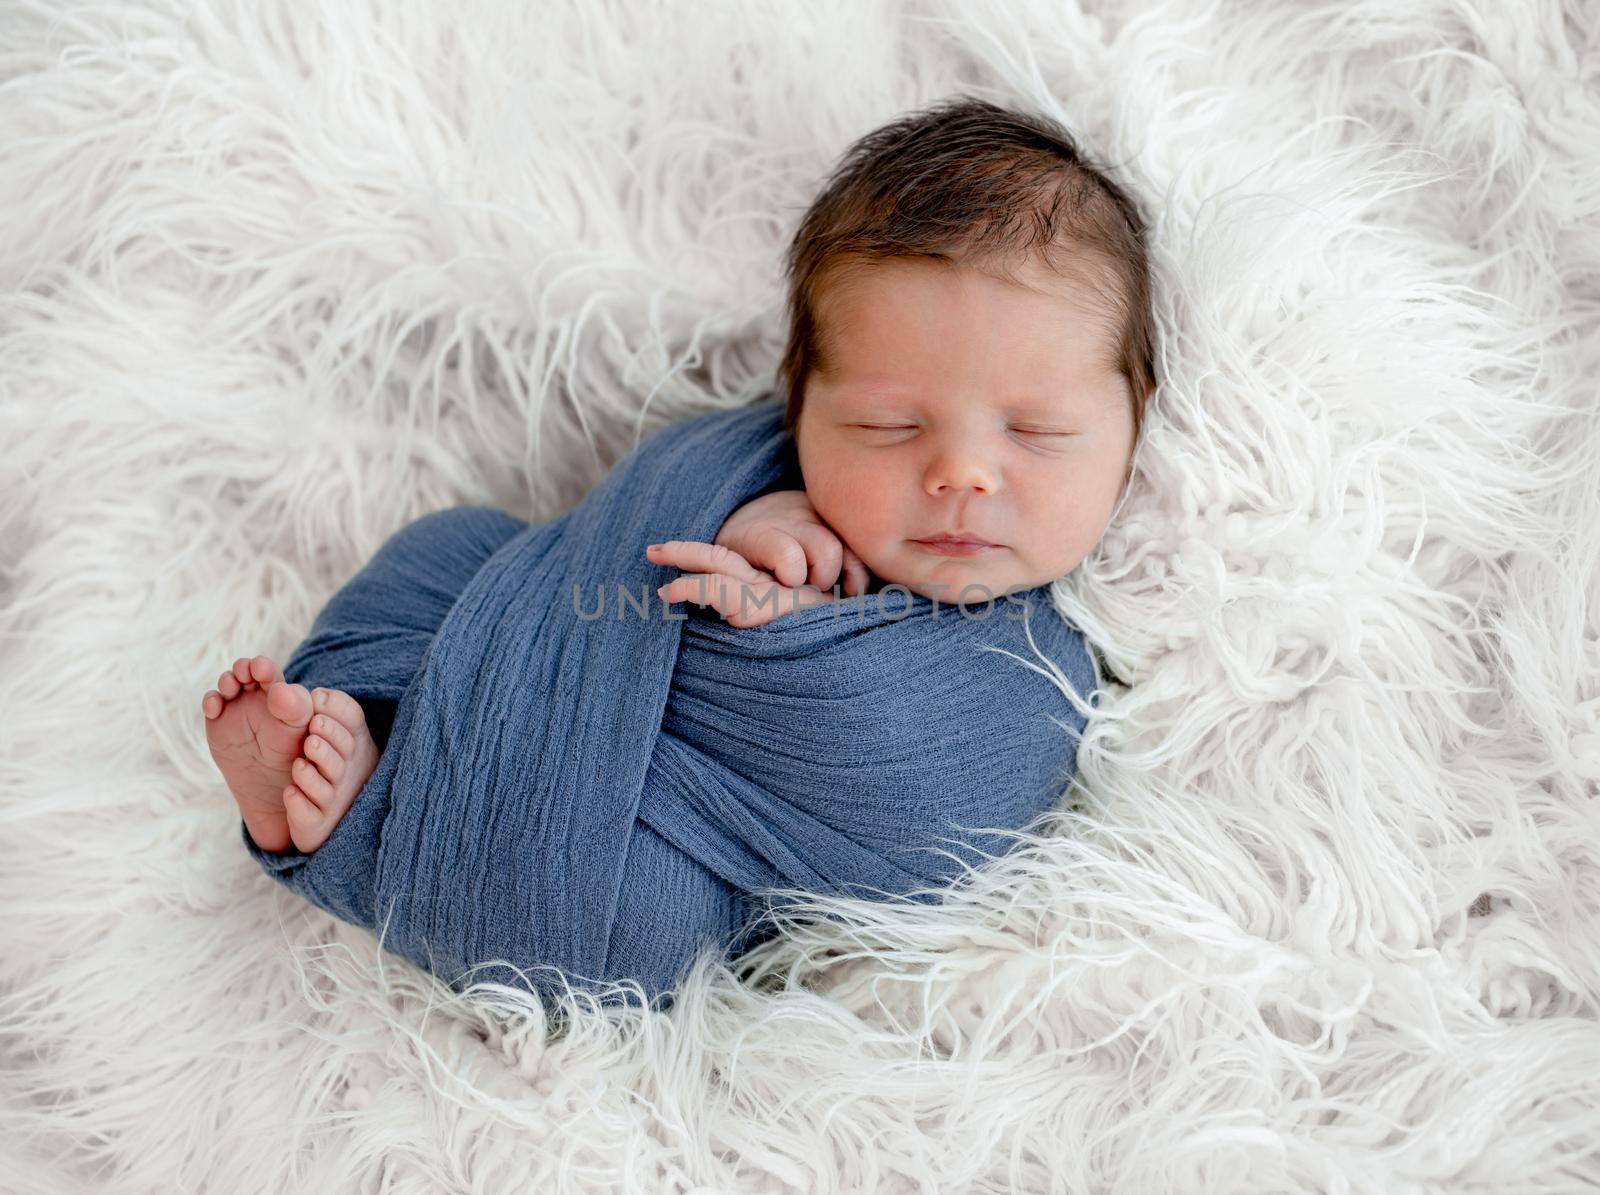 Newborn baby boy sleeping swaddled in fabric on white fur. Infant kid studio portrait with decoration